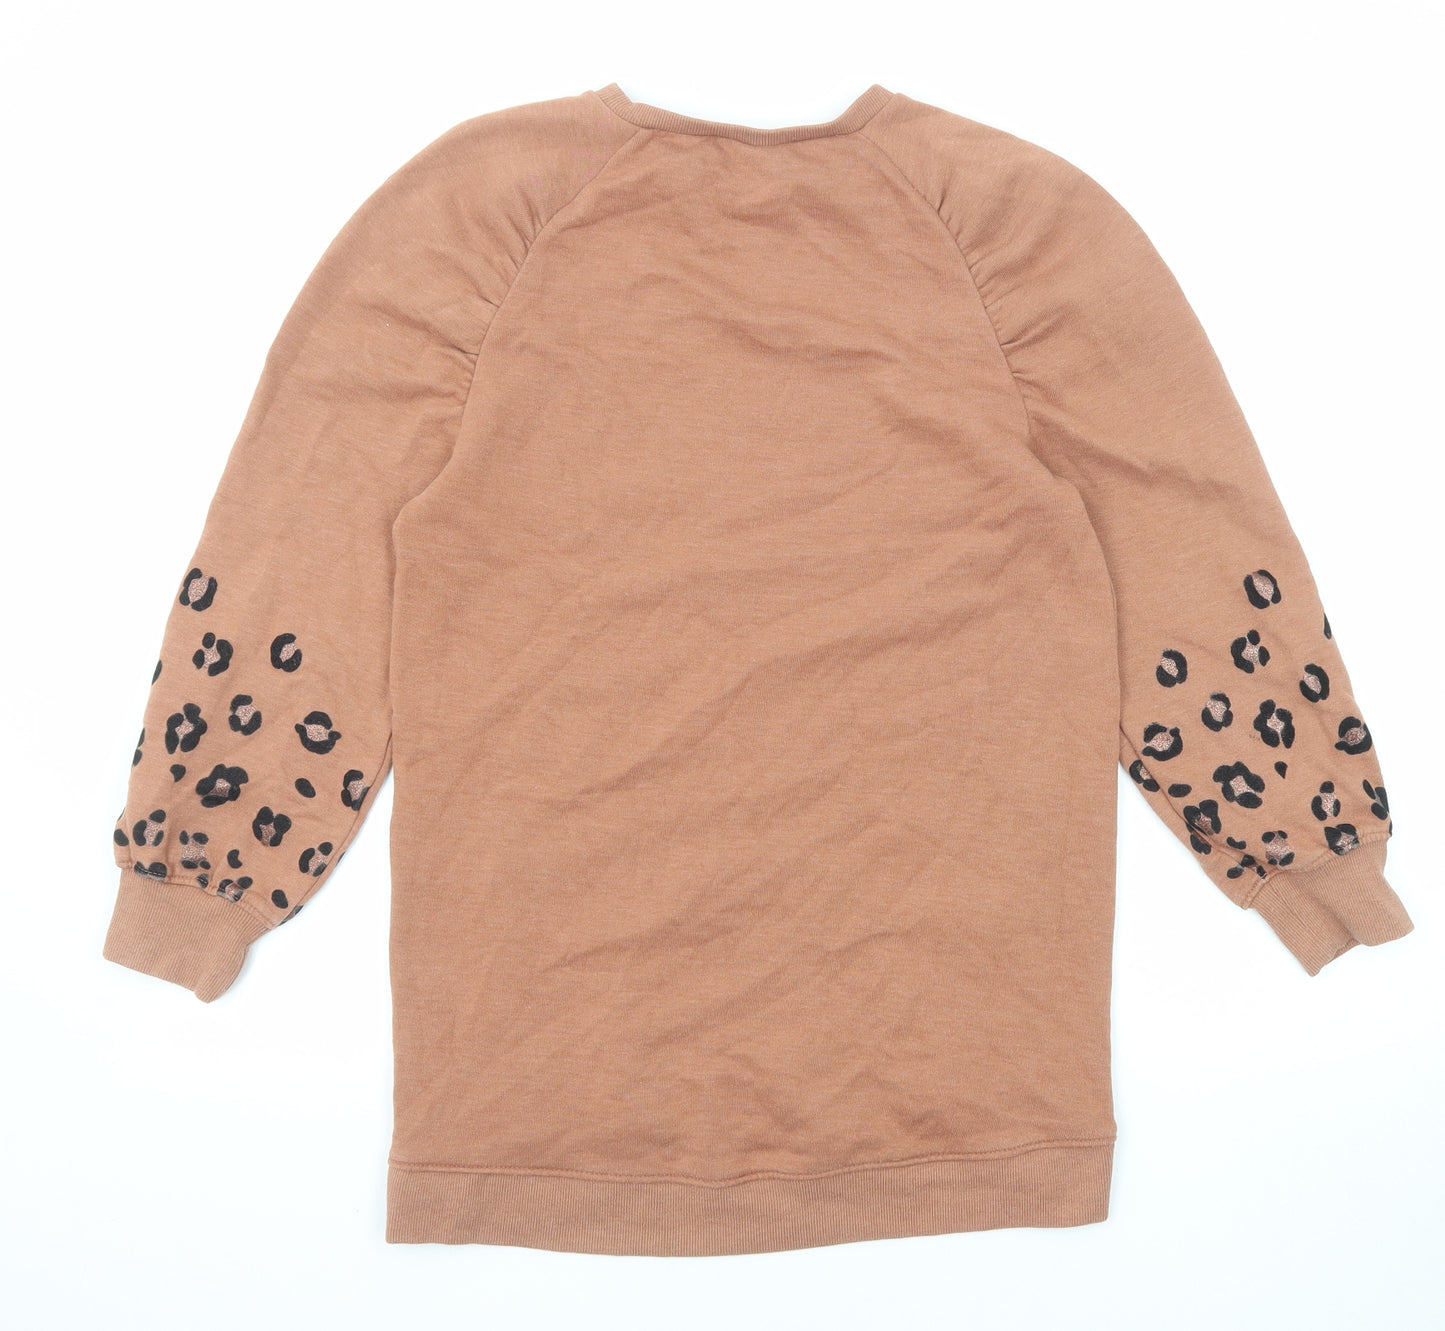 NEXT Girls Brown Animal Print Cotton Jumper Dress Size 11 Years Crew Neck Pullover - Leopard Print